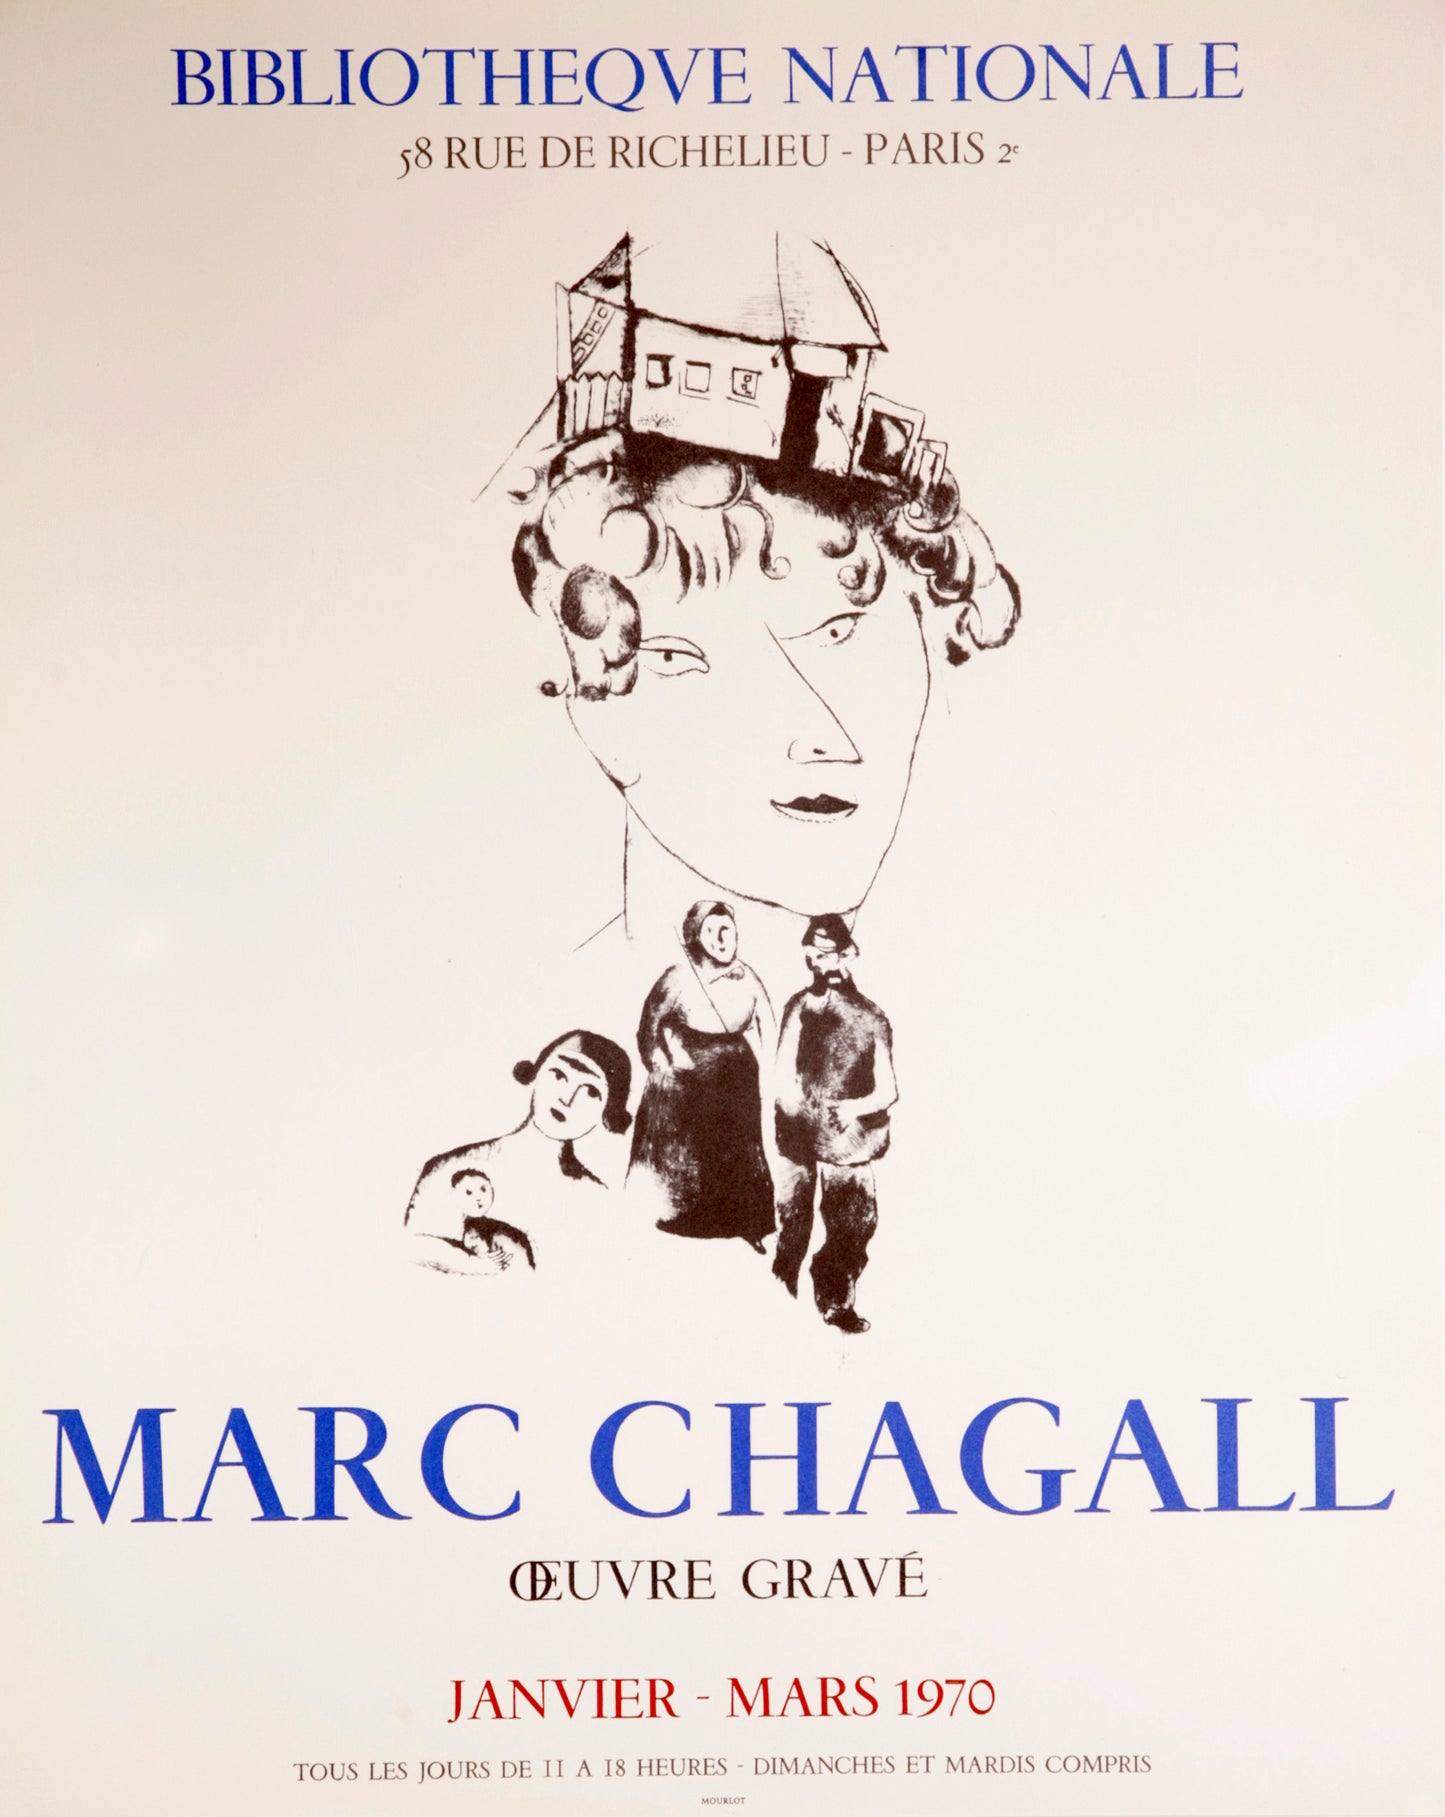 Autoportrait a la Famille - Bibliotheque Nationale (after) Marc Chagall, 1970 - Mourlot Editions - Fine_Art - Poster - Lithograph - Wall Art - Vintage - Prints - Original